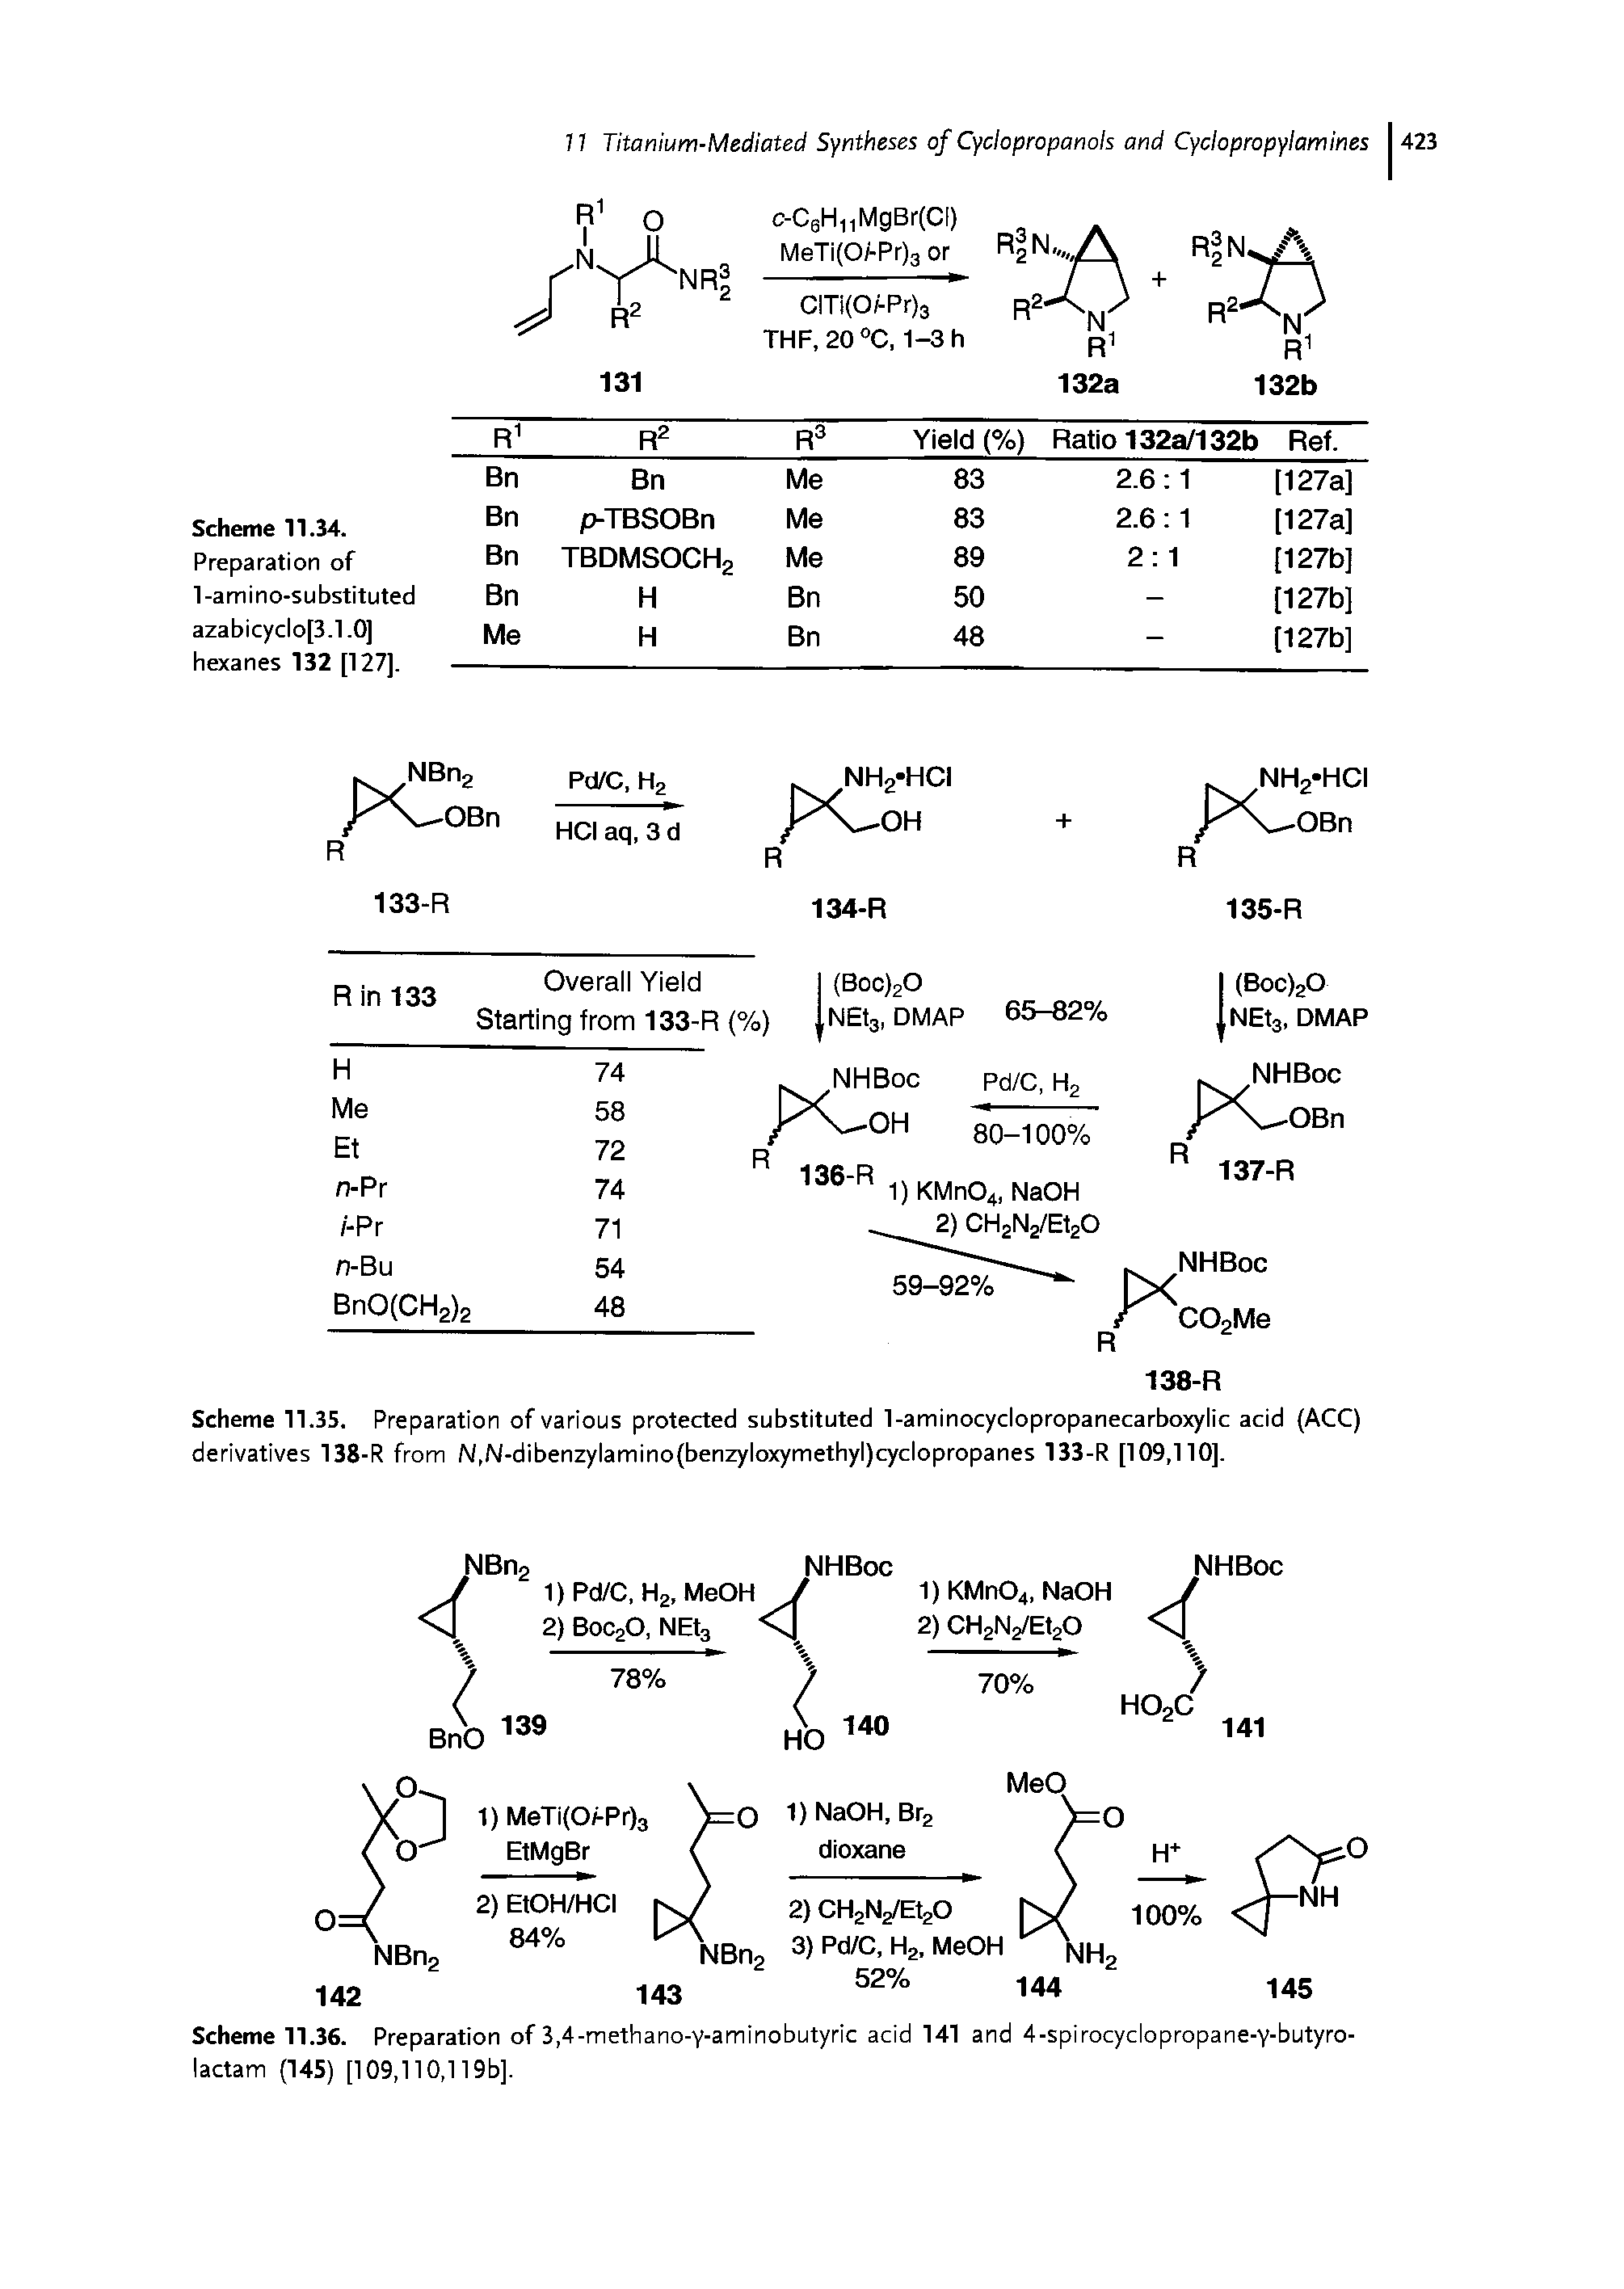 Scheme 11.36. Preparation of 3,4-methano-Y-aminobutyric acid 141 and 4-spirocyclopropane-y-butyro-lactam (145) [109,110,119b].